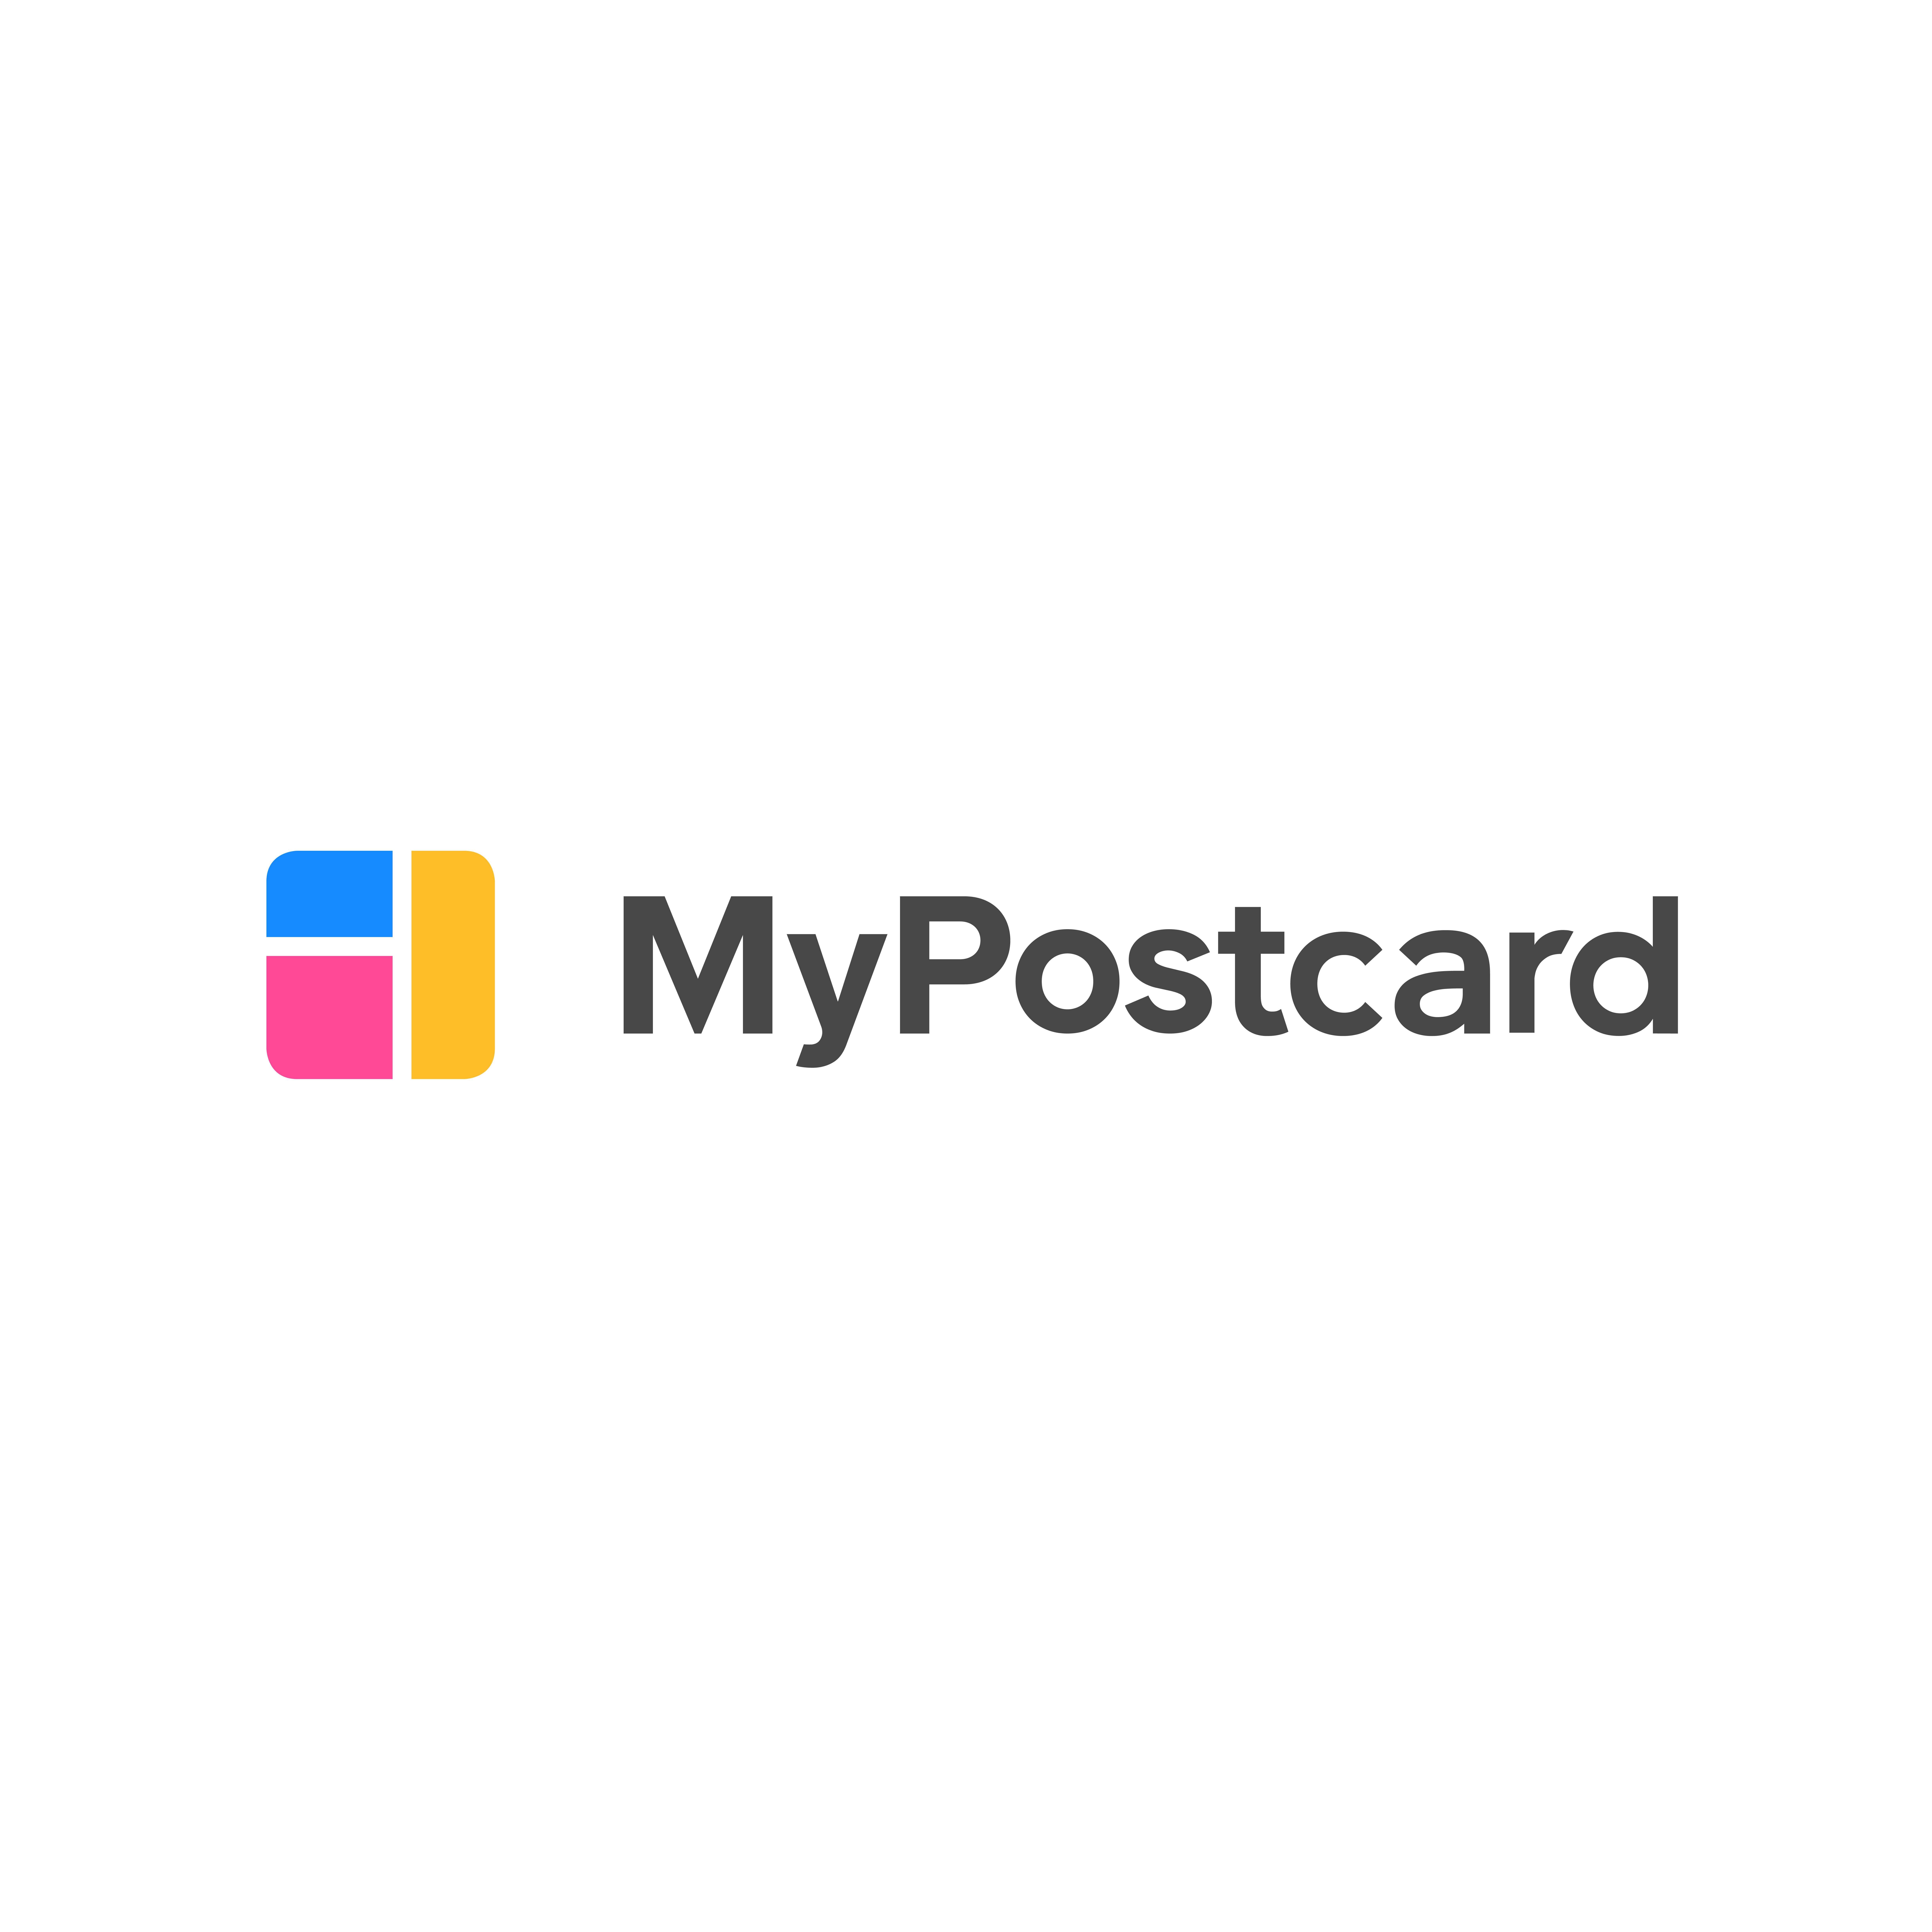 MyPostcard.com GmbH